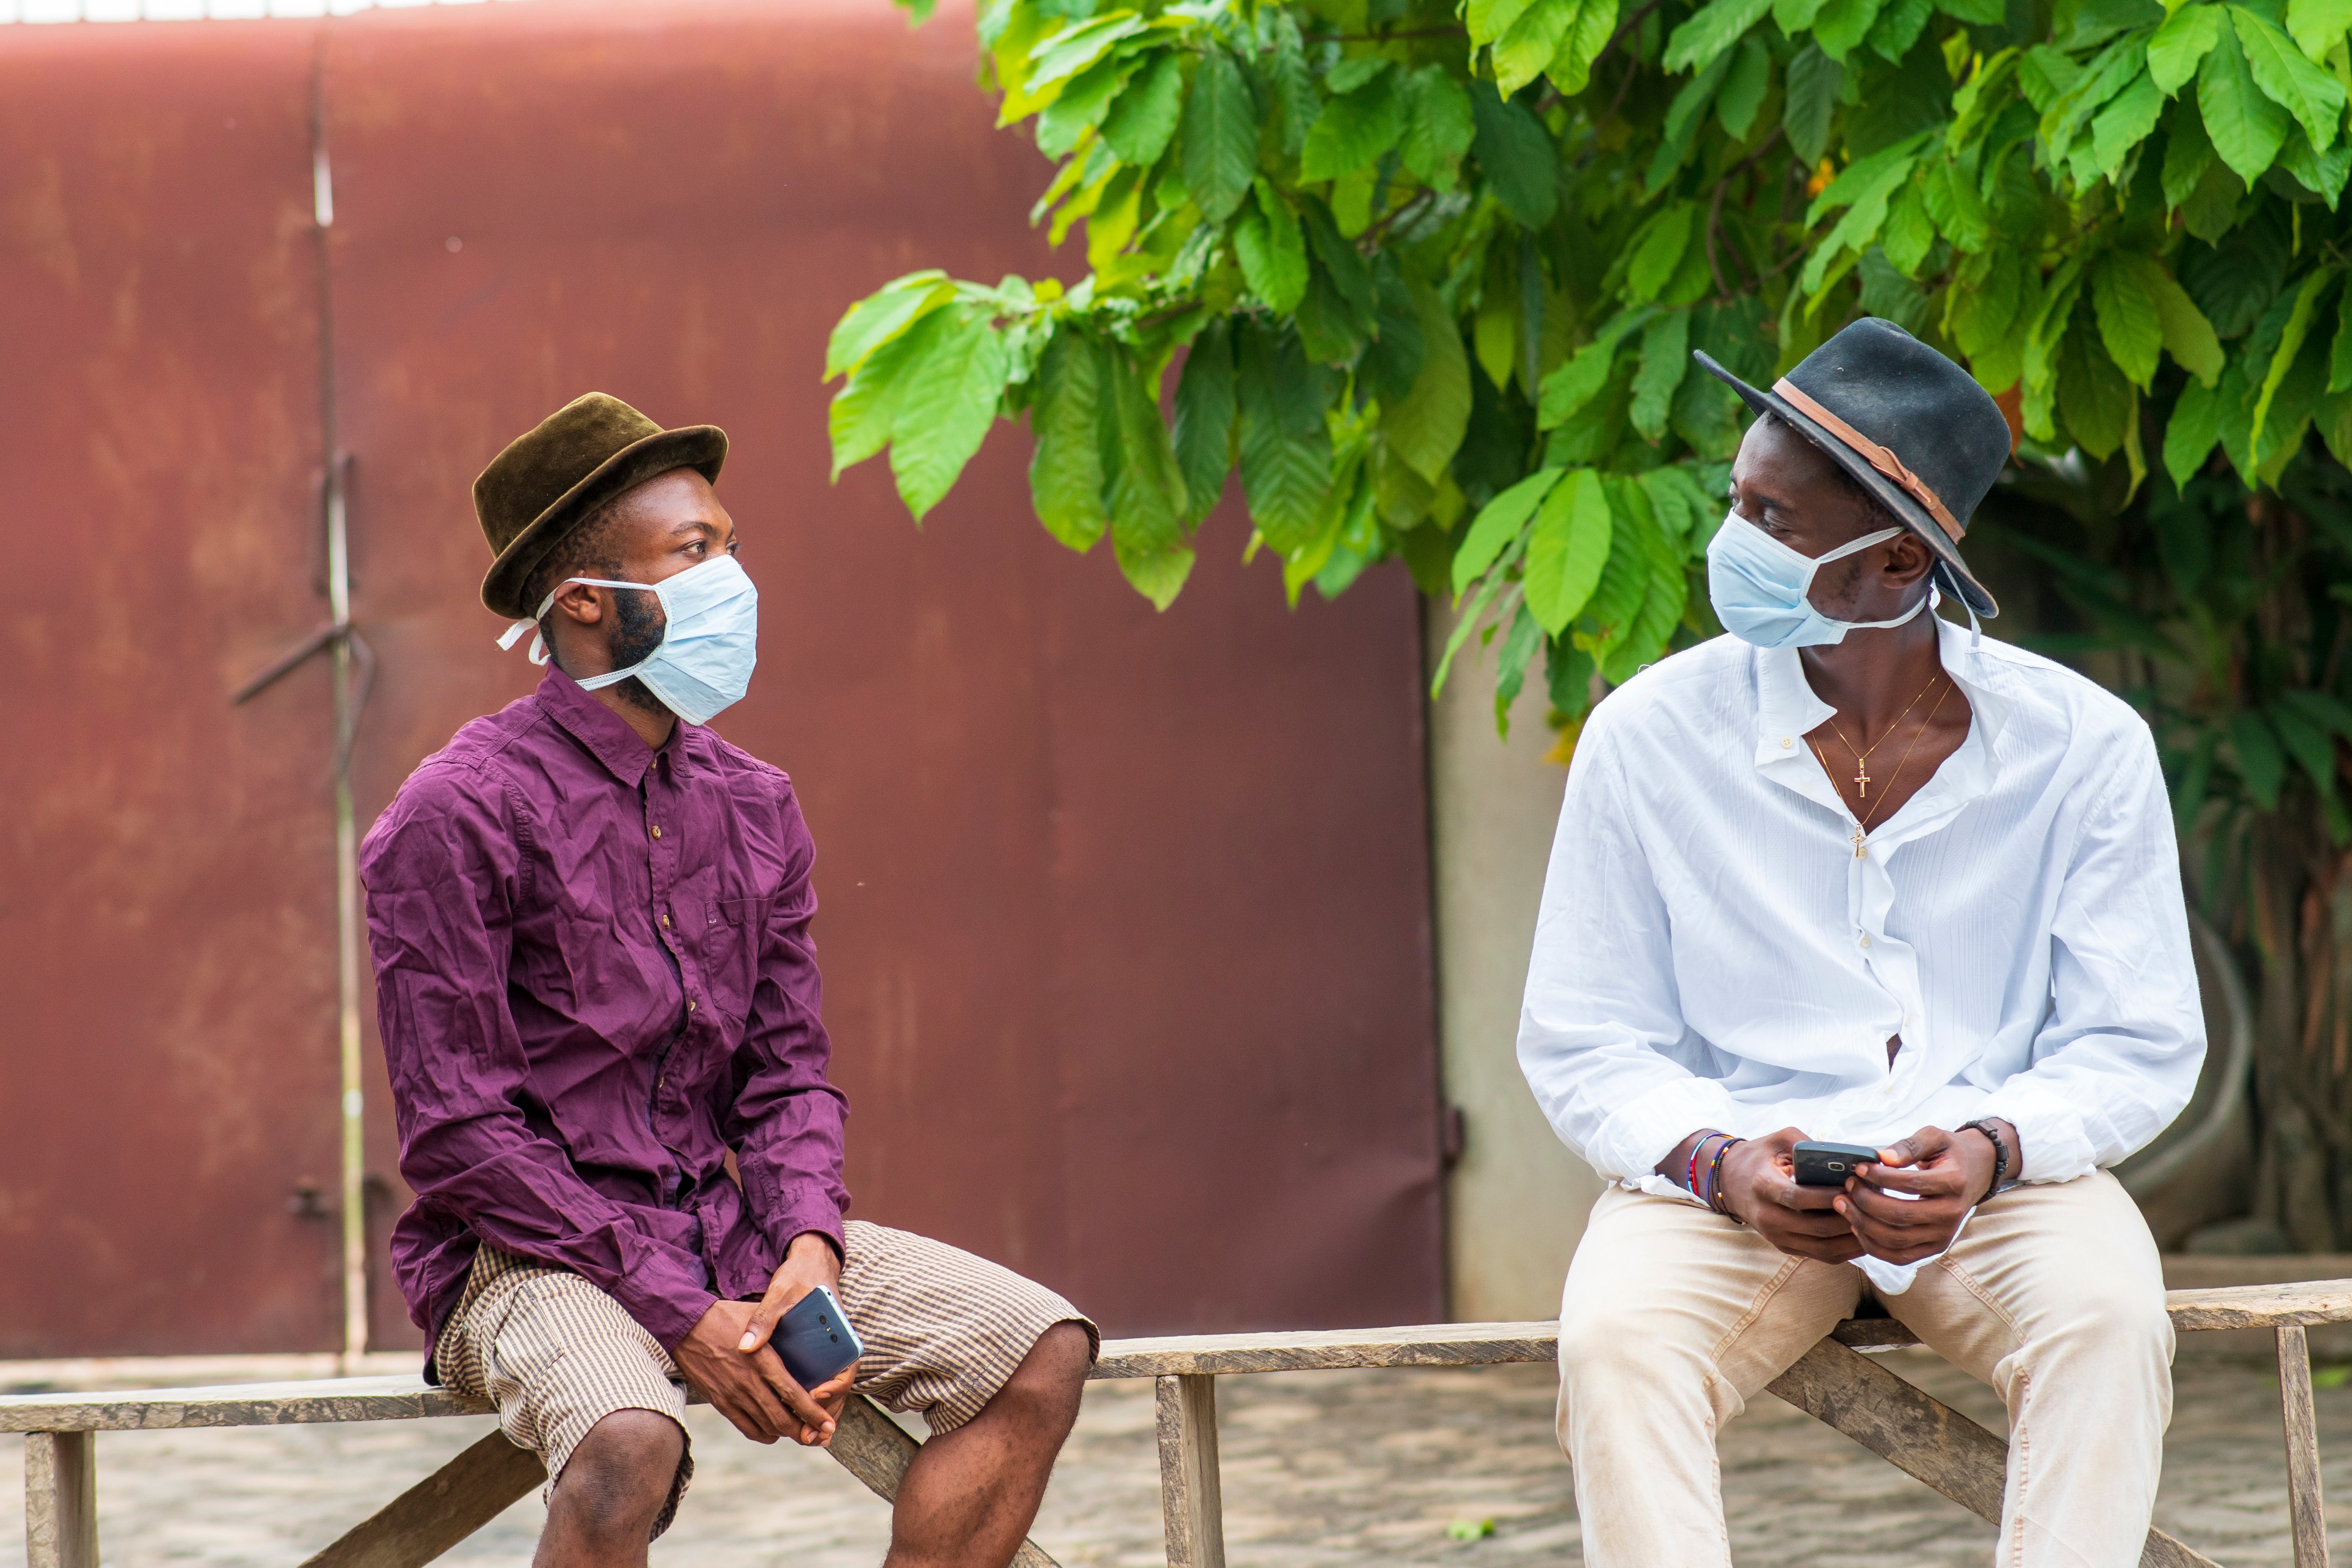 market research masks outdoors conversation